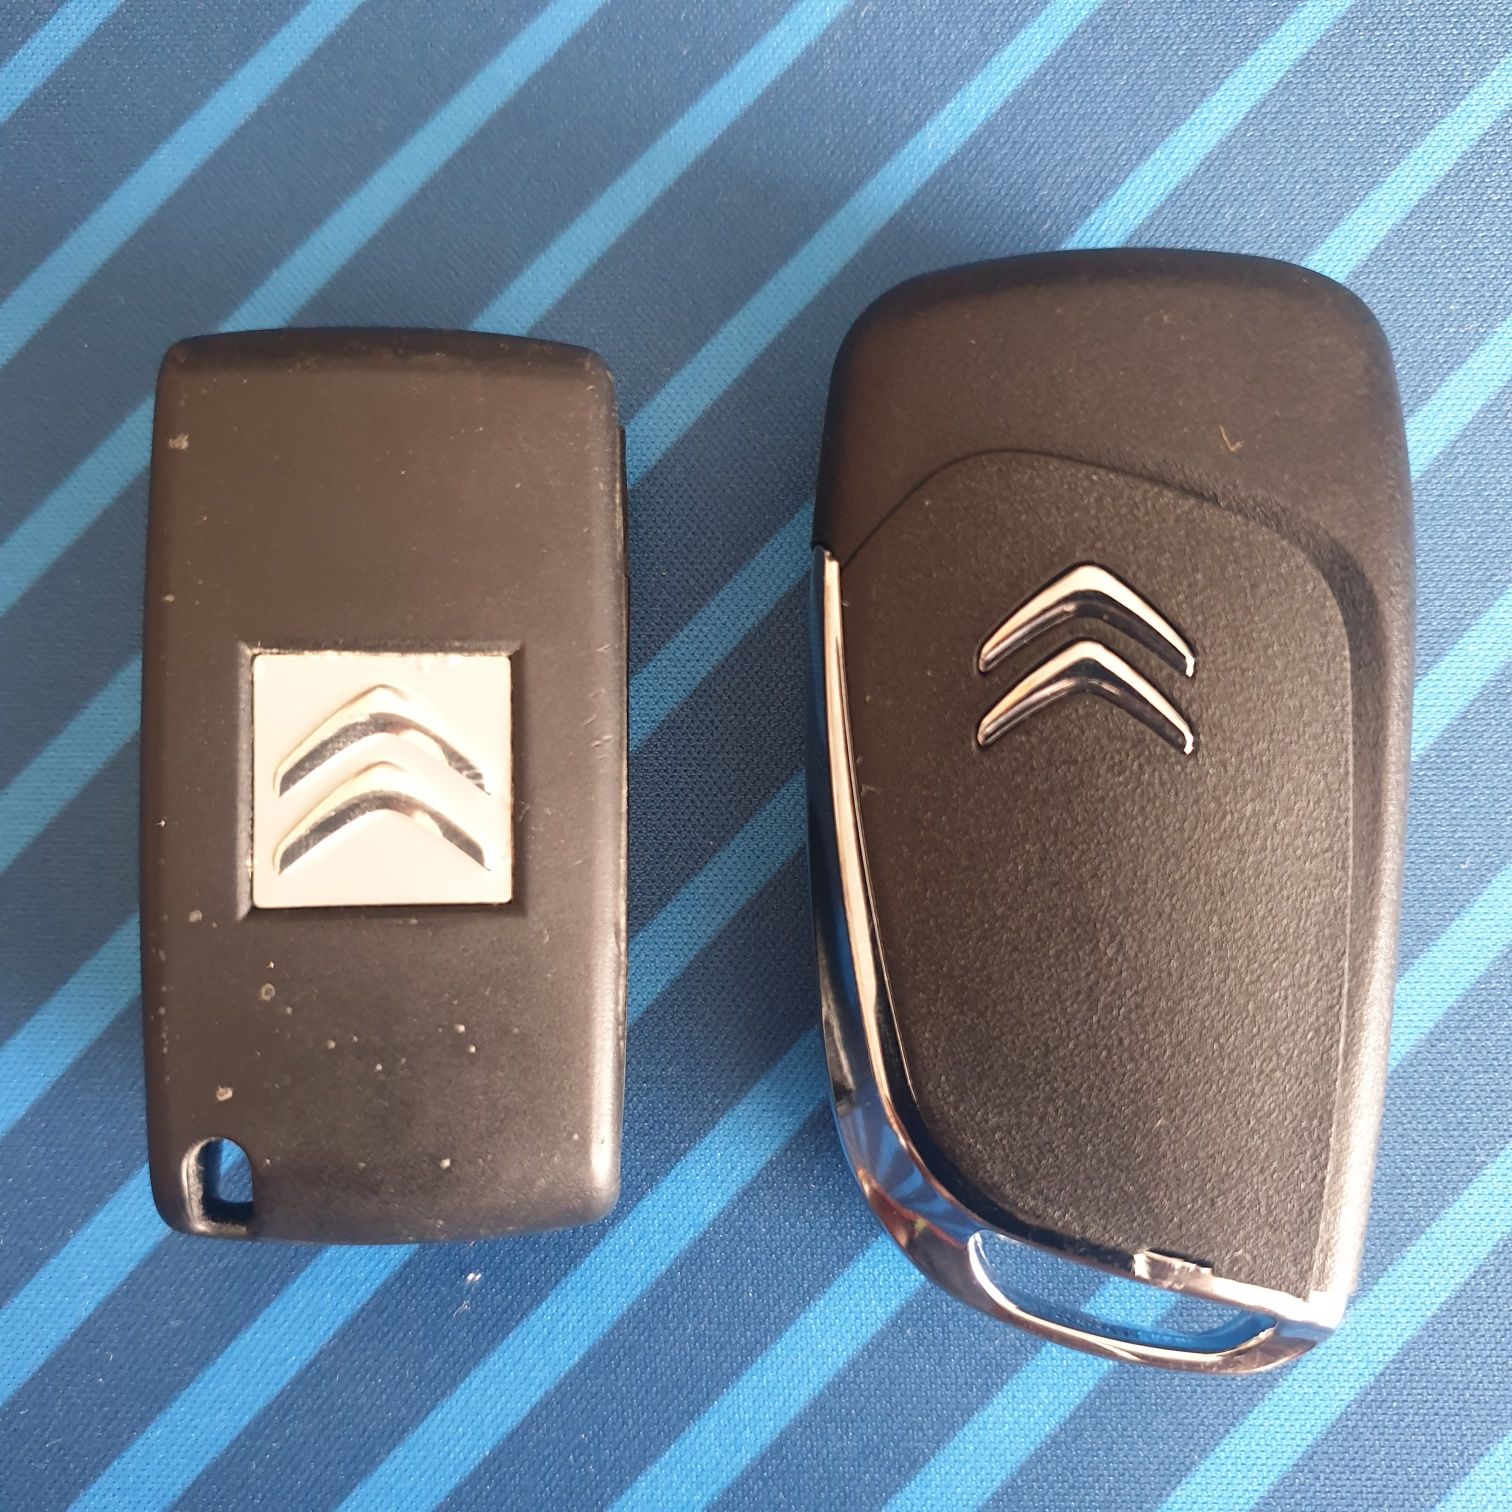 Carcaça chave Citroën 3 botões